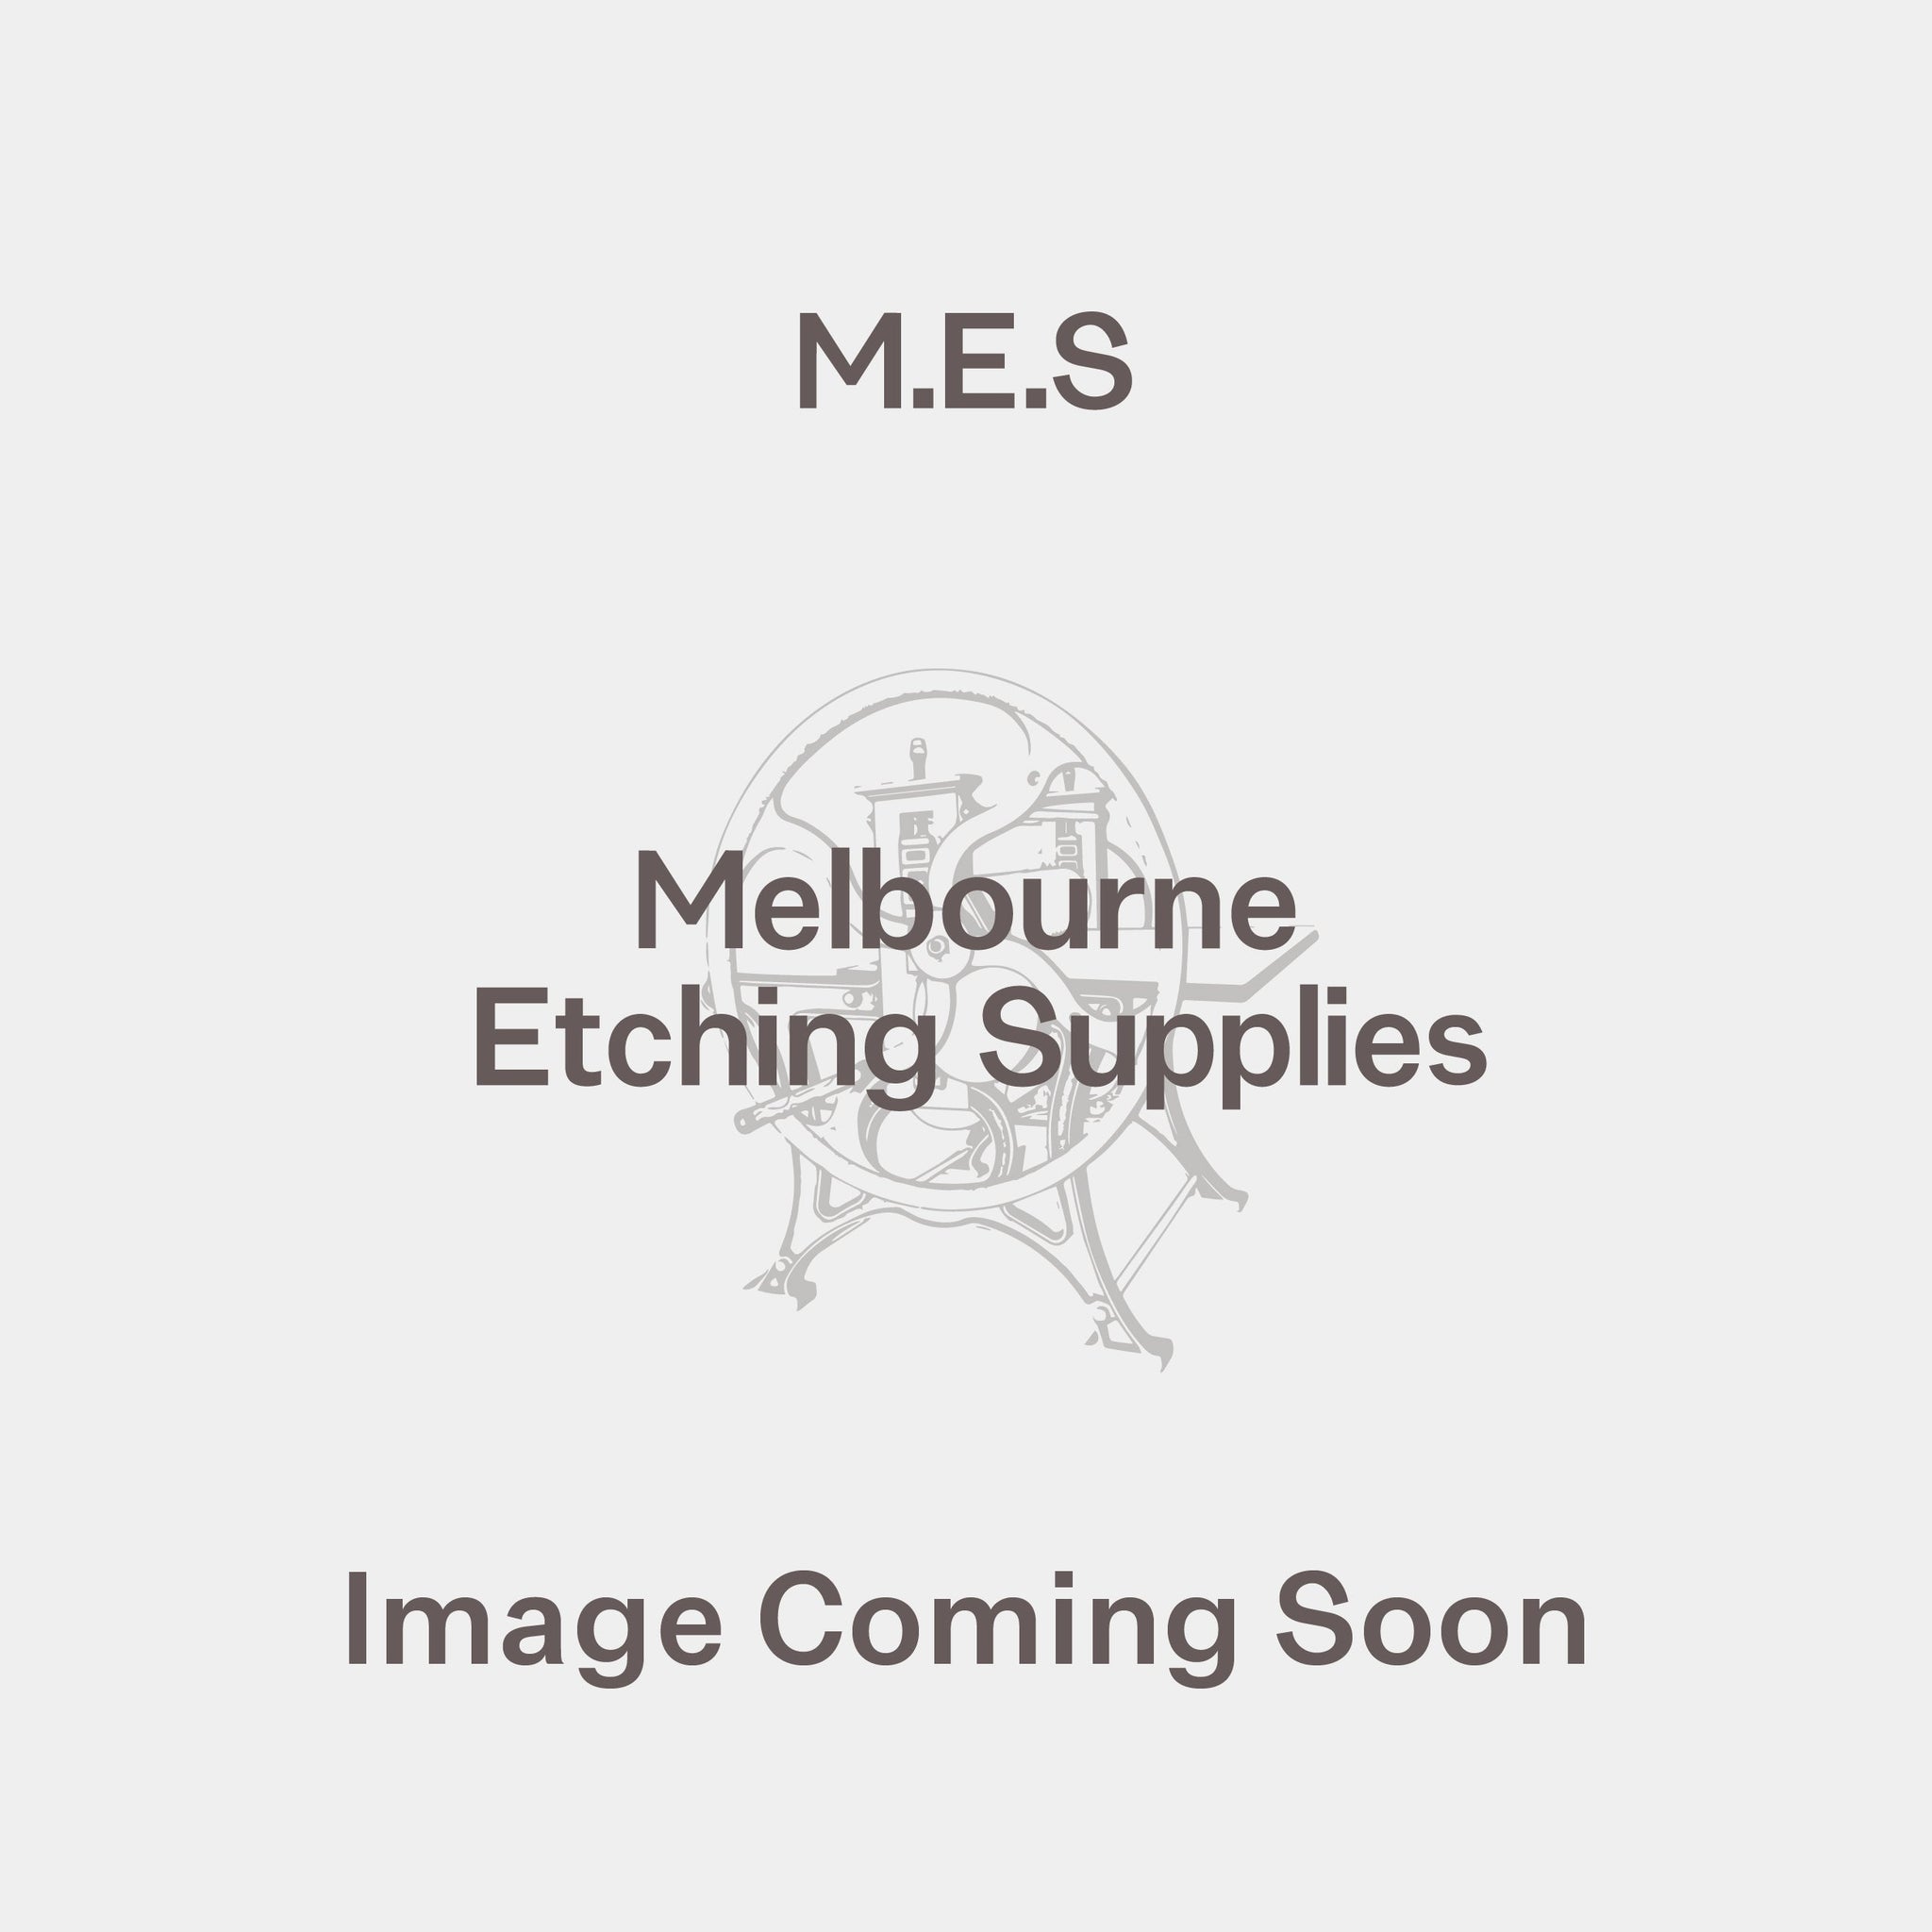 Langridge Picture Varnish 100ml - Melbourne Etching Supplies